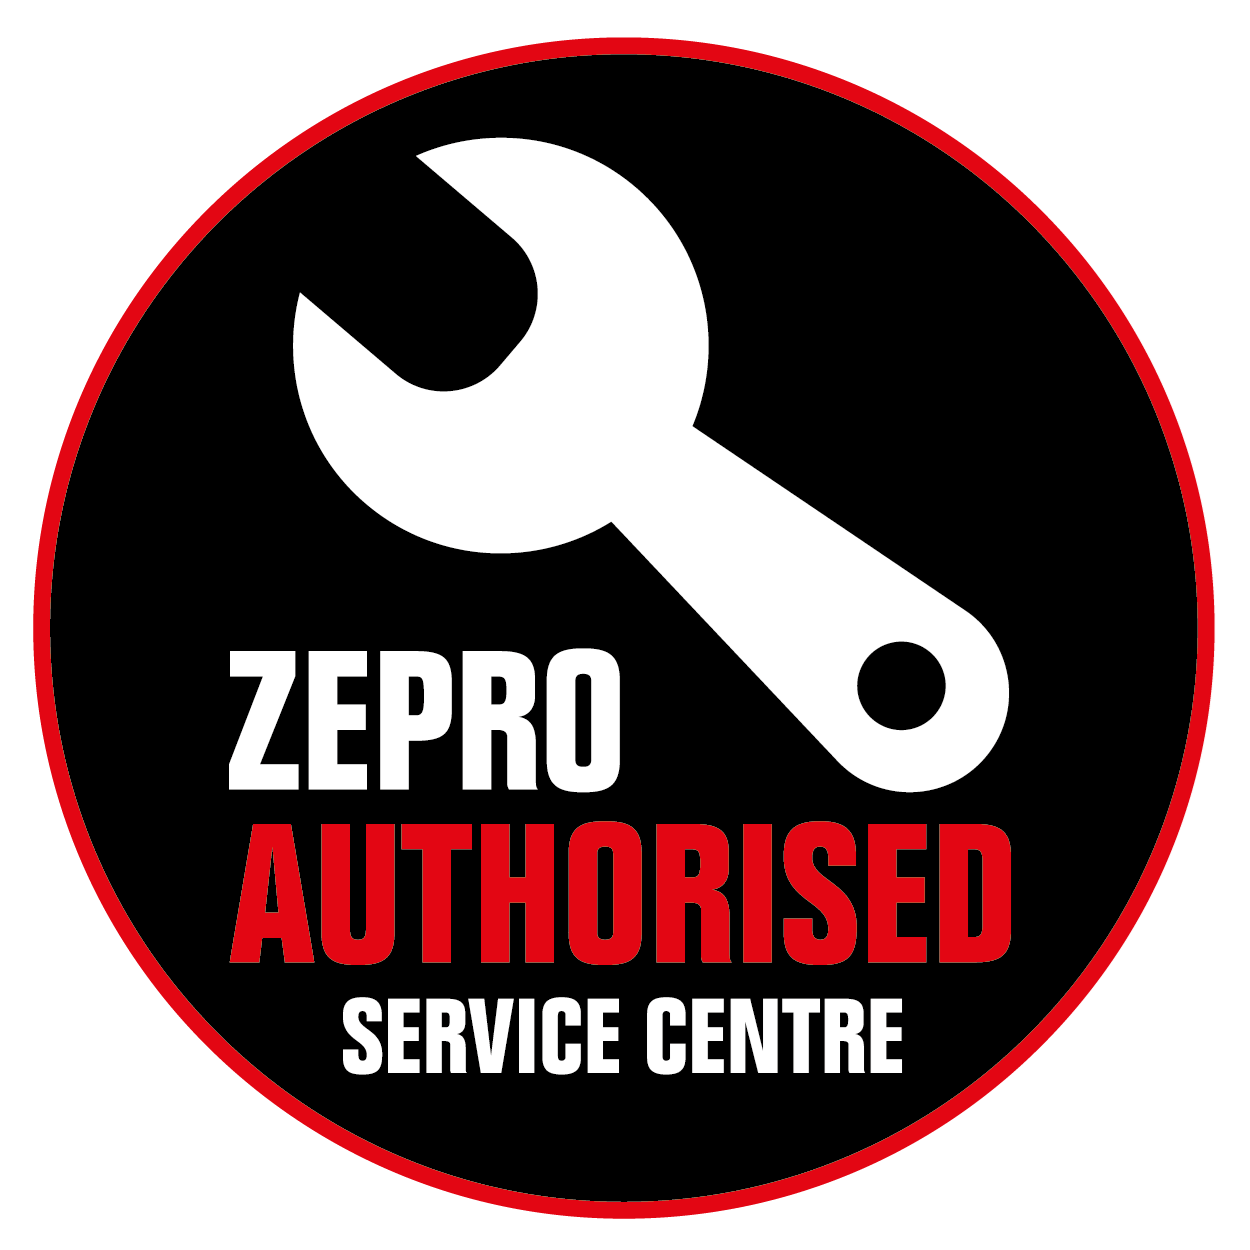 authorised_service_centre_zepro